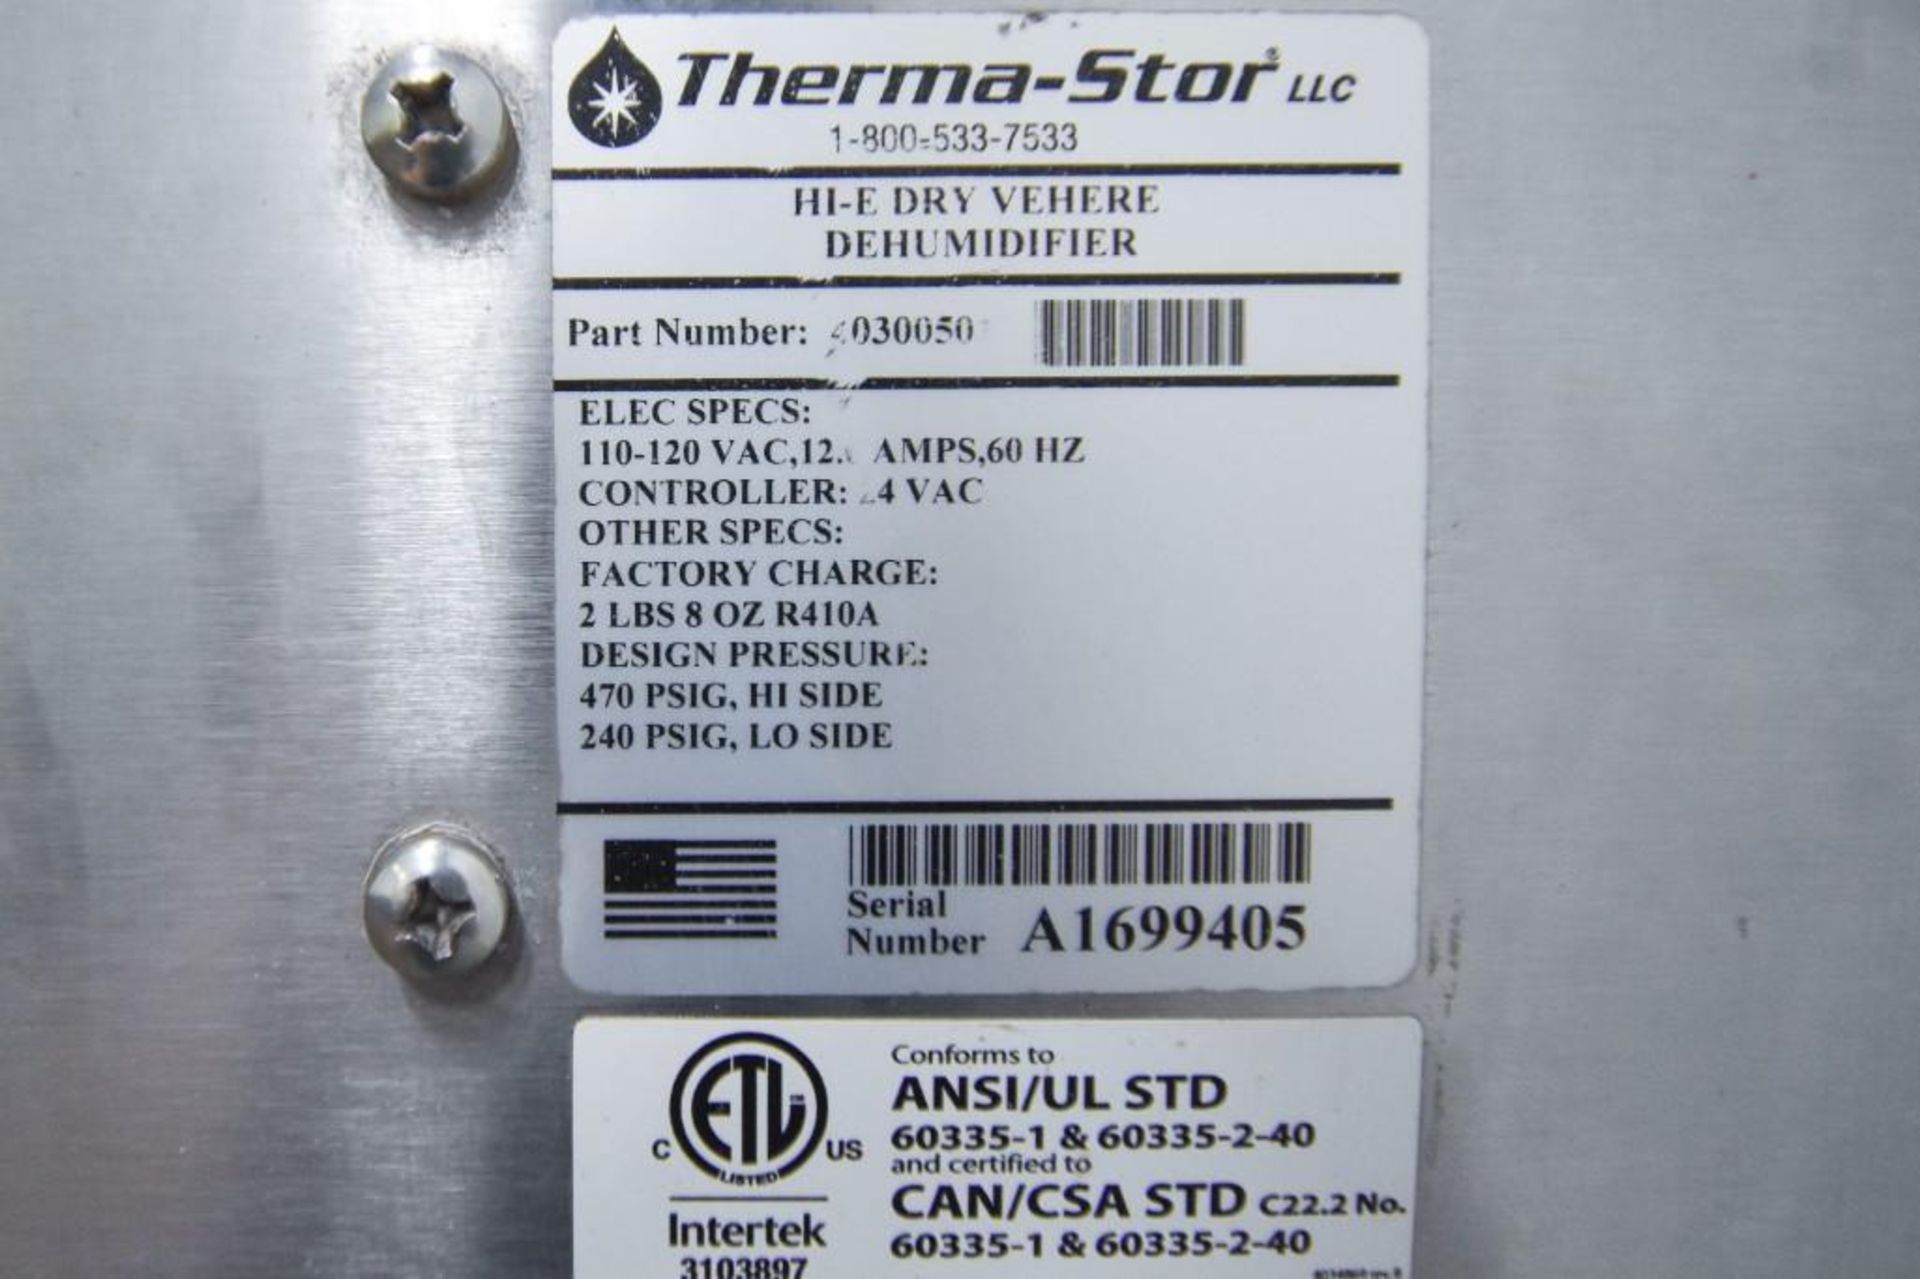 Hi-E Dry Vehere Thermastor - Image 2 of 2